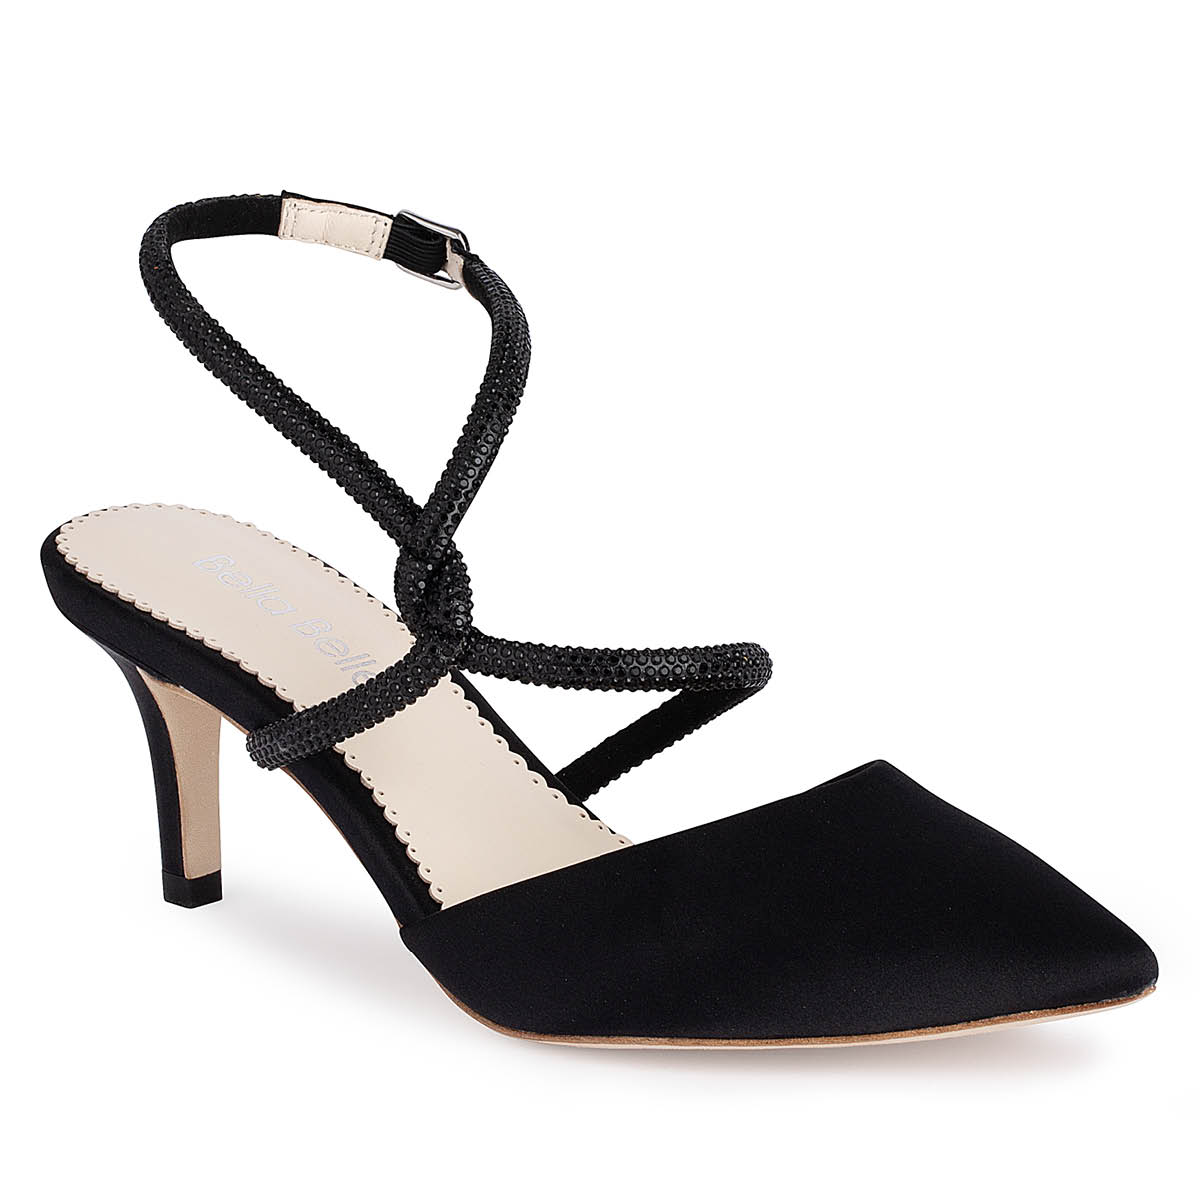 Women's Sandals With Low Heels With Ornaments Black Benicio